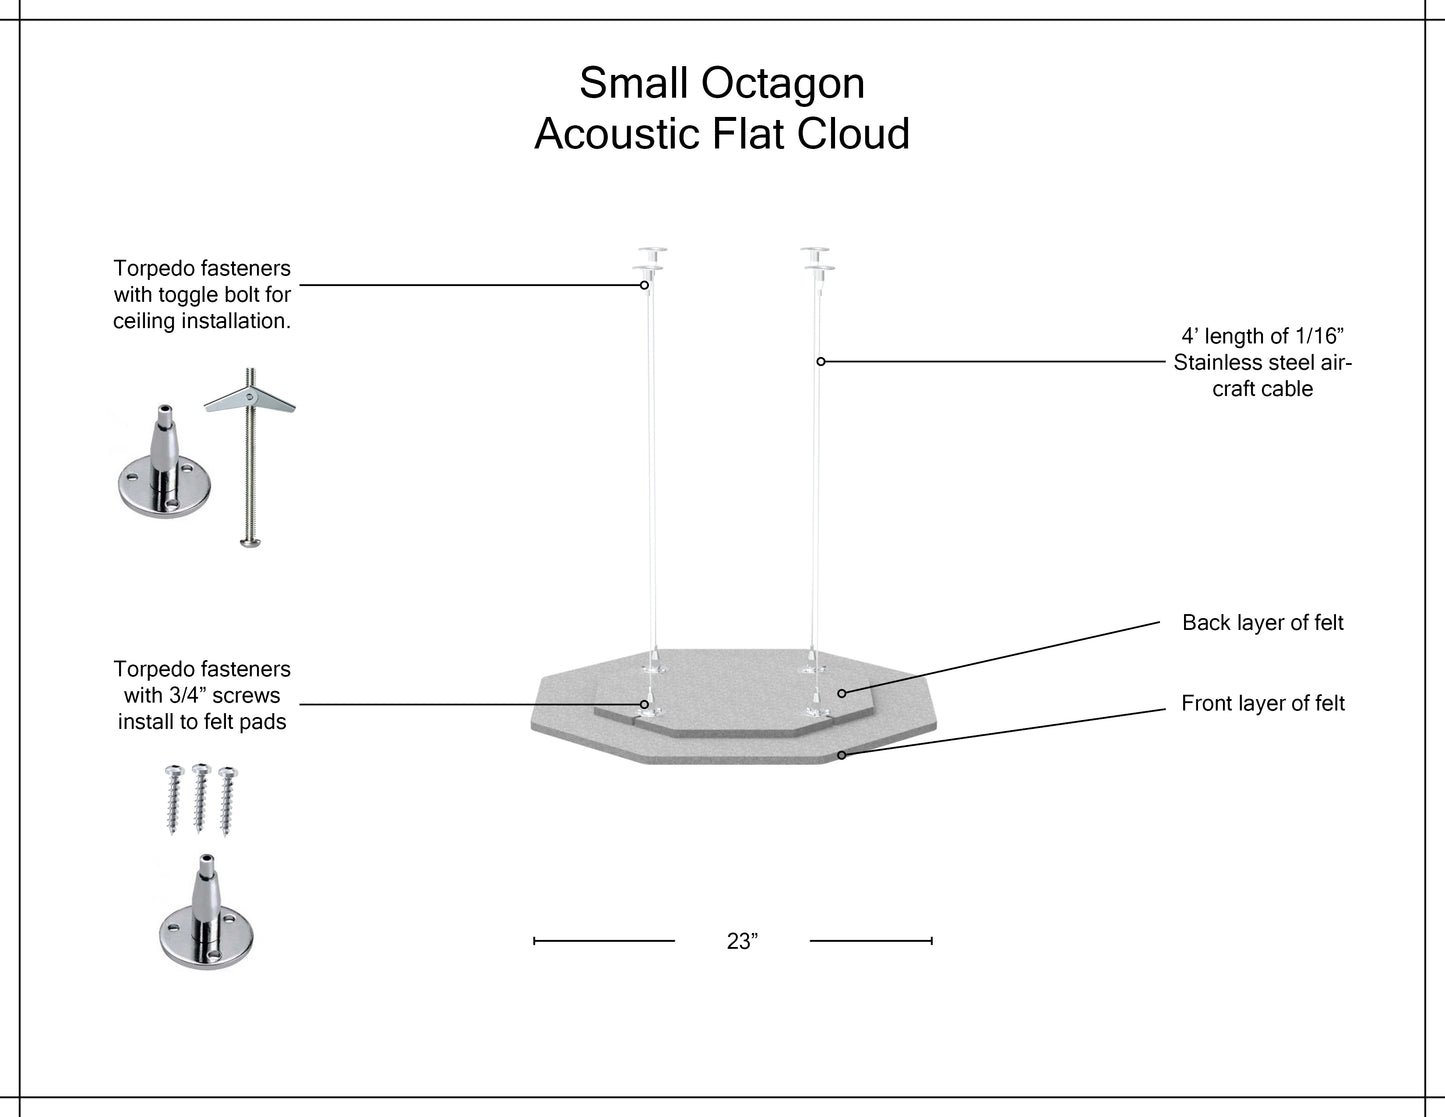 Small Octagon Acoustic Flat Cloud